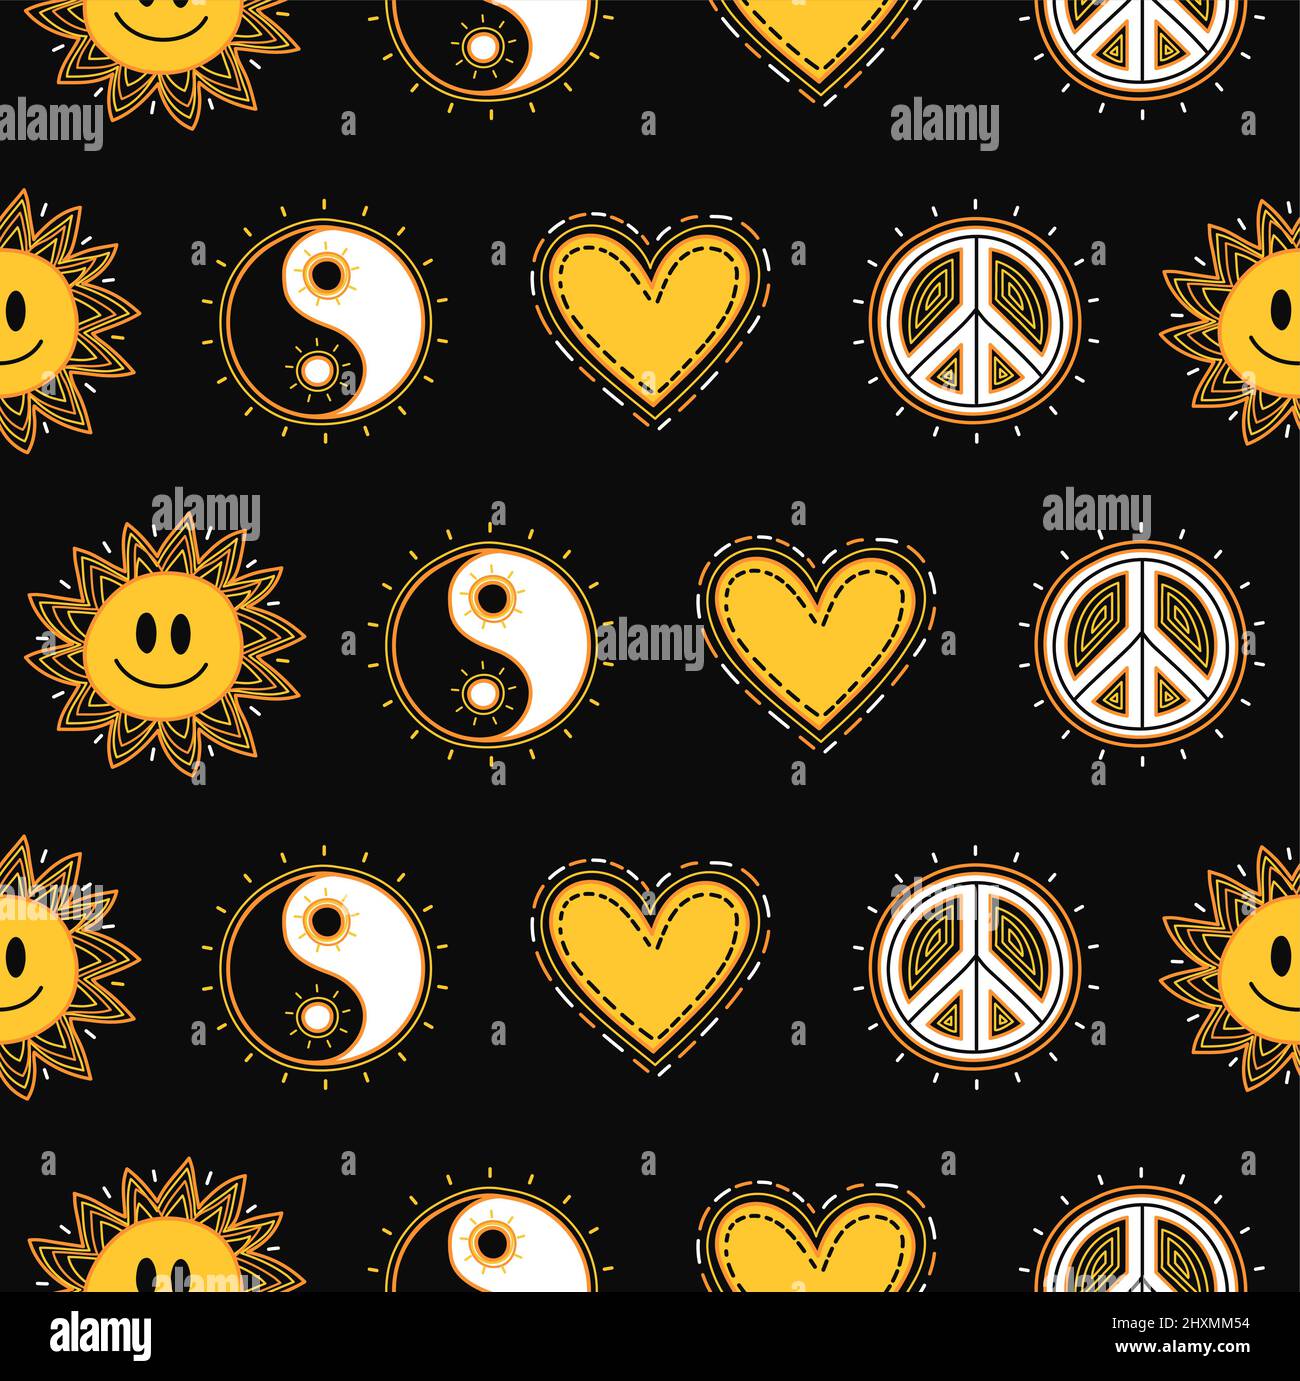 Yin Yang,peace hippie sign,sun seamless pattern.Vector hand drawn cartoon character illustration.Yin Yang,smile face sun,heart,love hippie peace symbol,boho,60s,70s seamless pattern wallpaper print Stock Vector